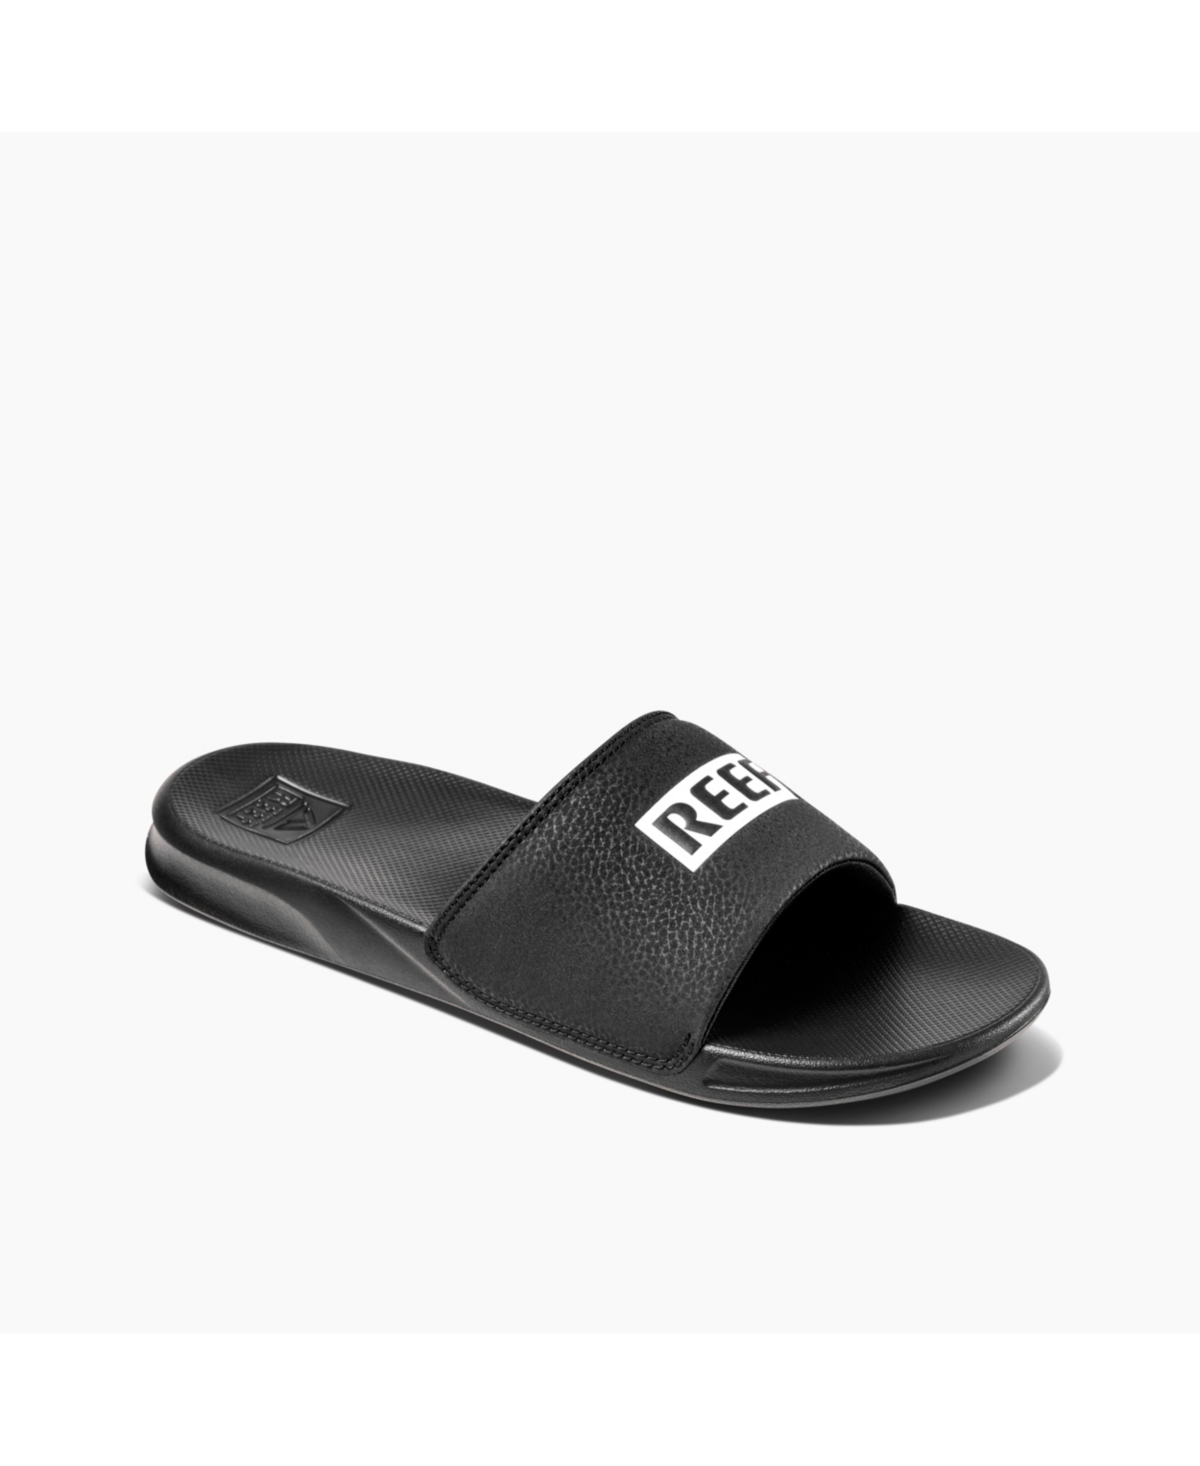 Men's One Comfort FitÂ Slides Sandals - Black, White